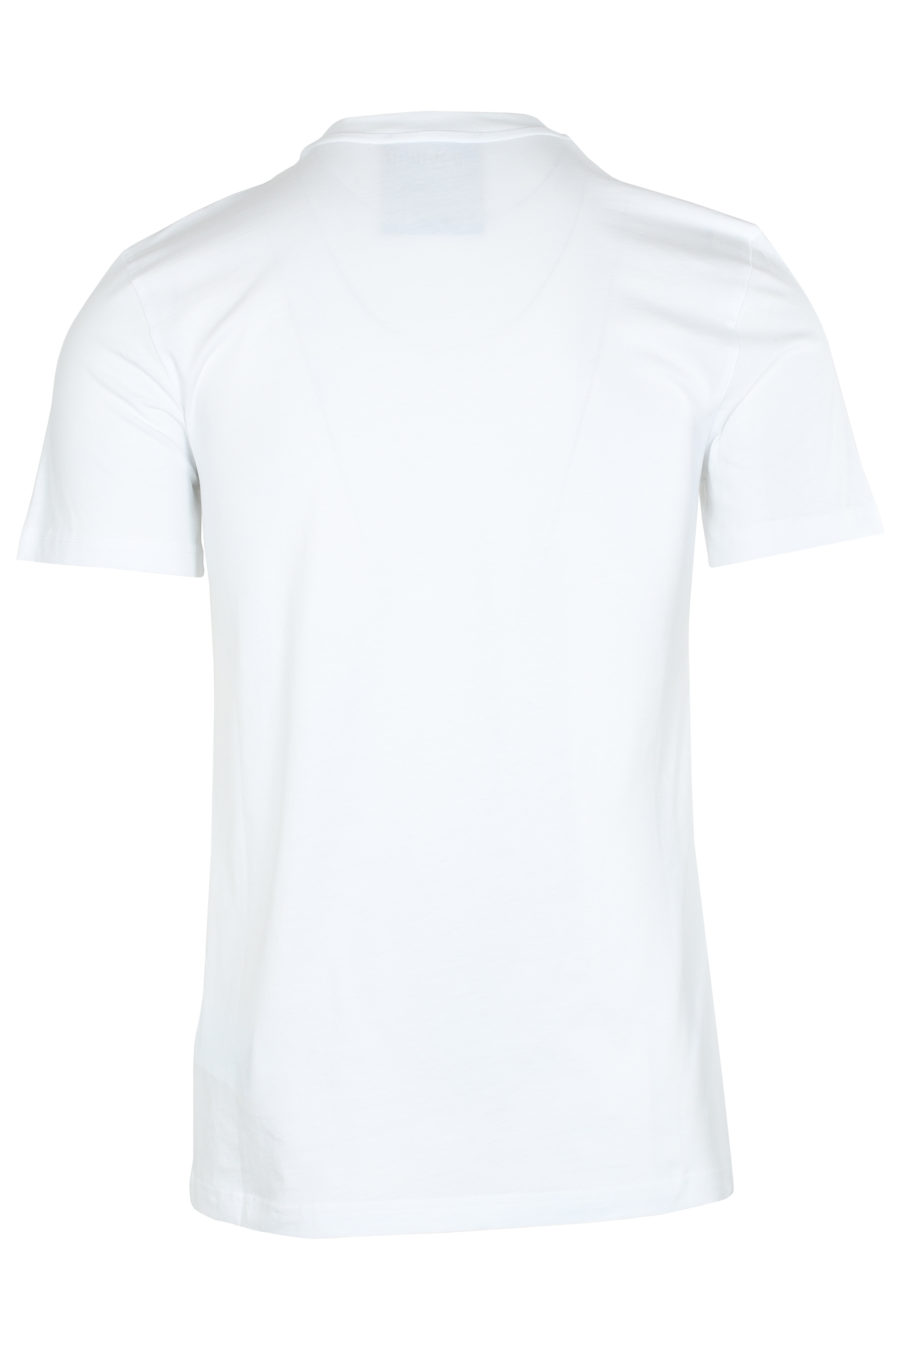 Camiseta blanca con logo "Couture" - IMG 6175